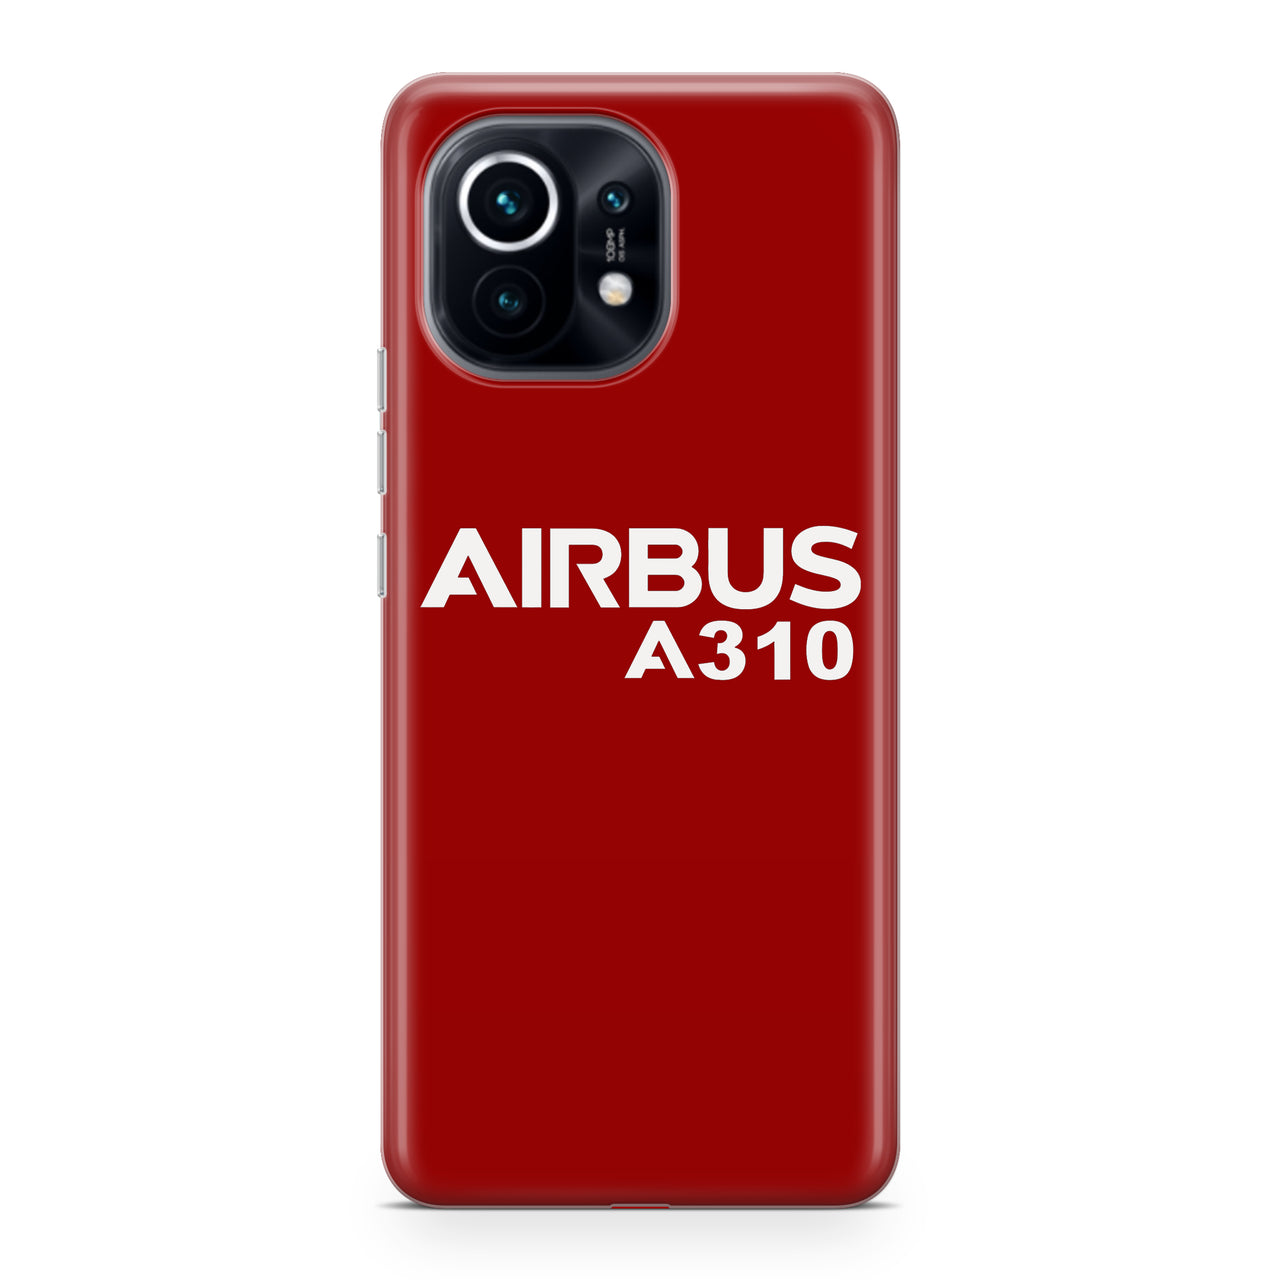 Airbus A310 & Text Designed Xiaomi Cases